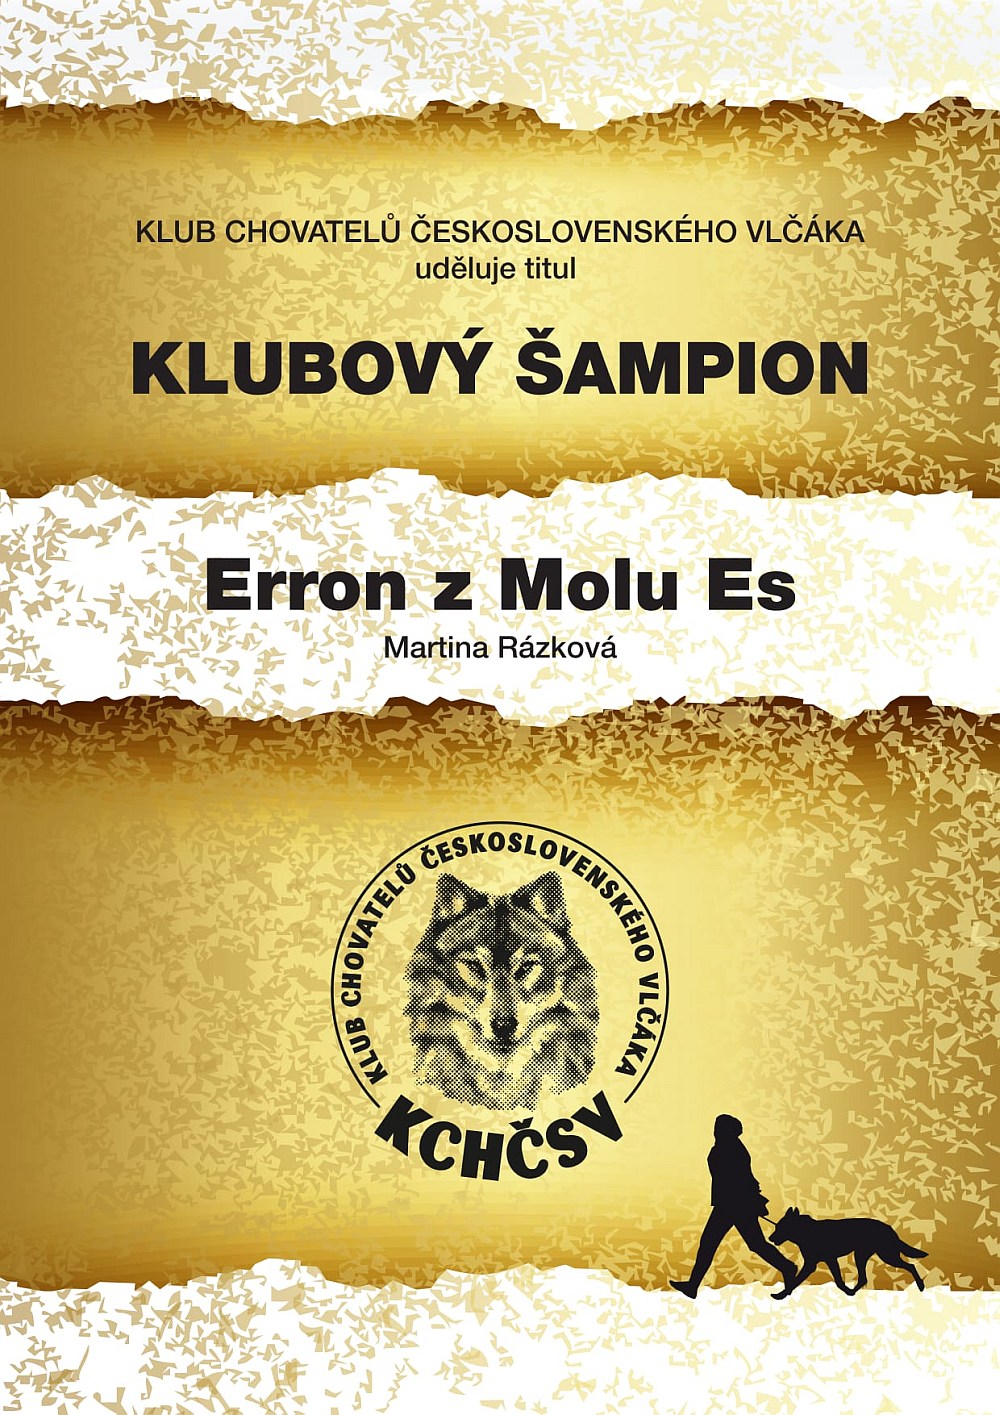 Klubový šampion - Erron z Molu Es